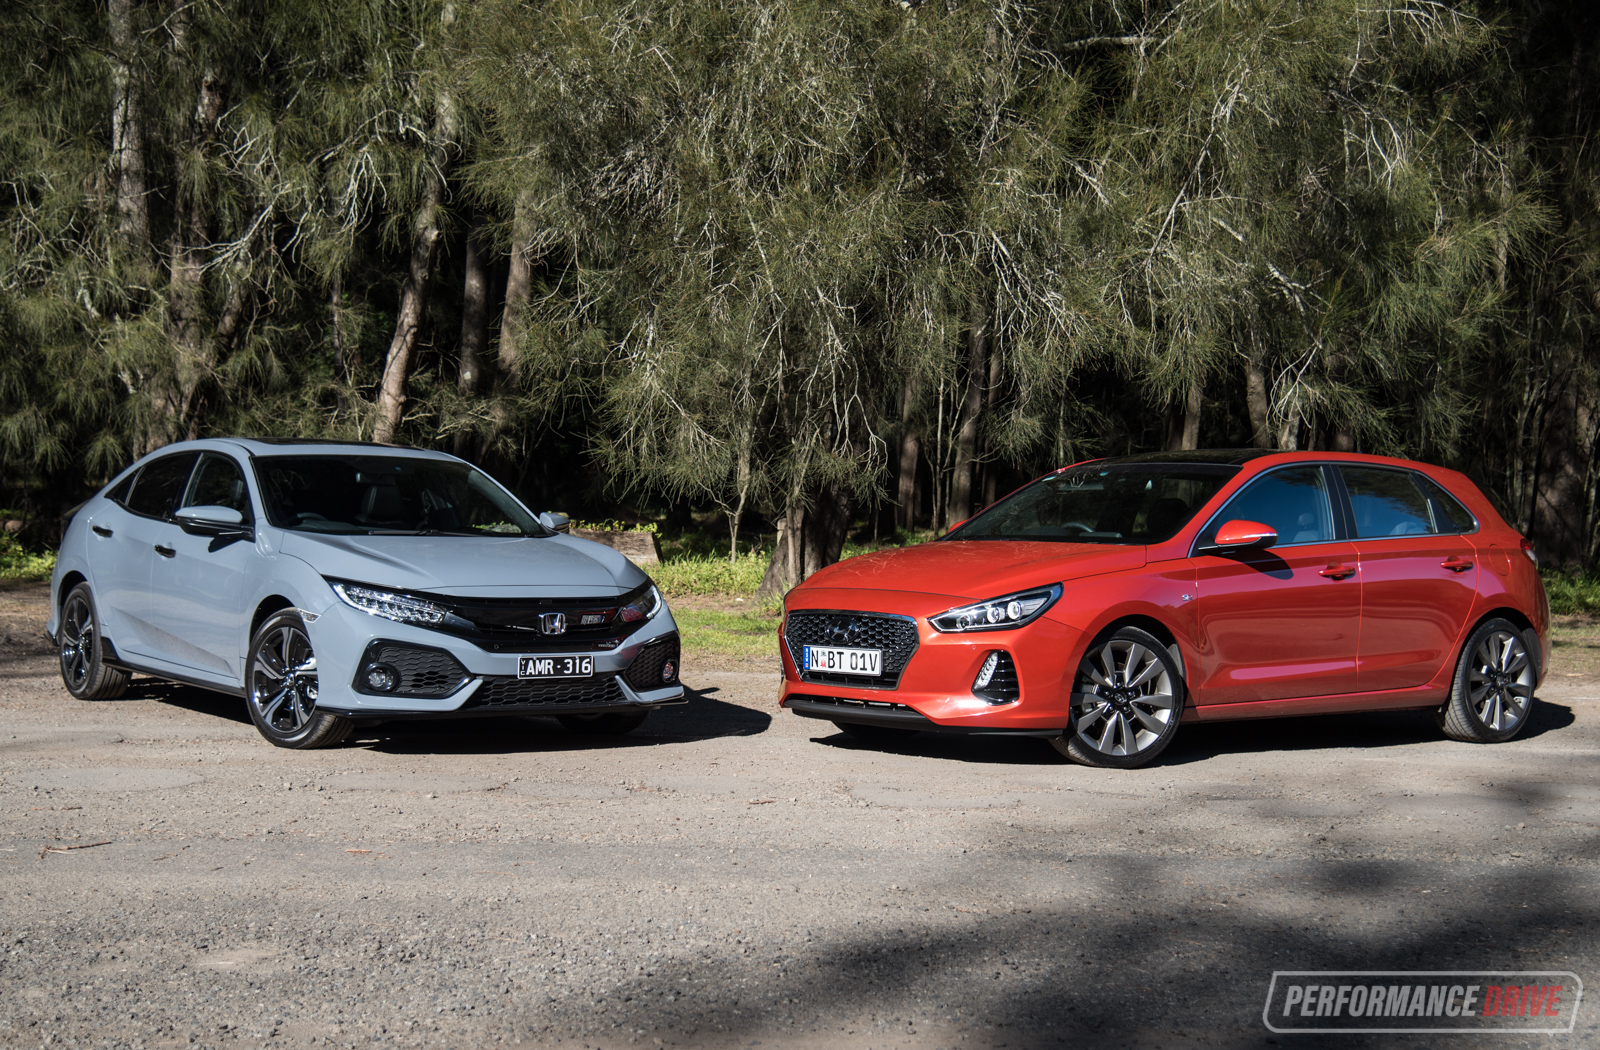 2017 Hyundai i30 SR vs Honda Civic RS: warm hatch comparison (video)